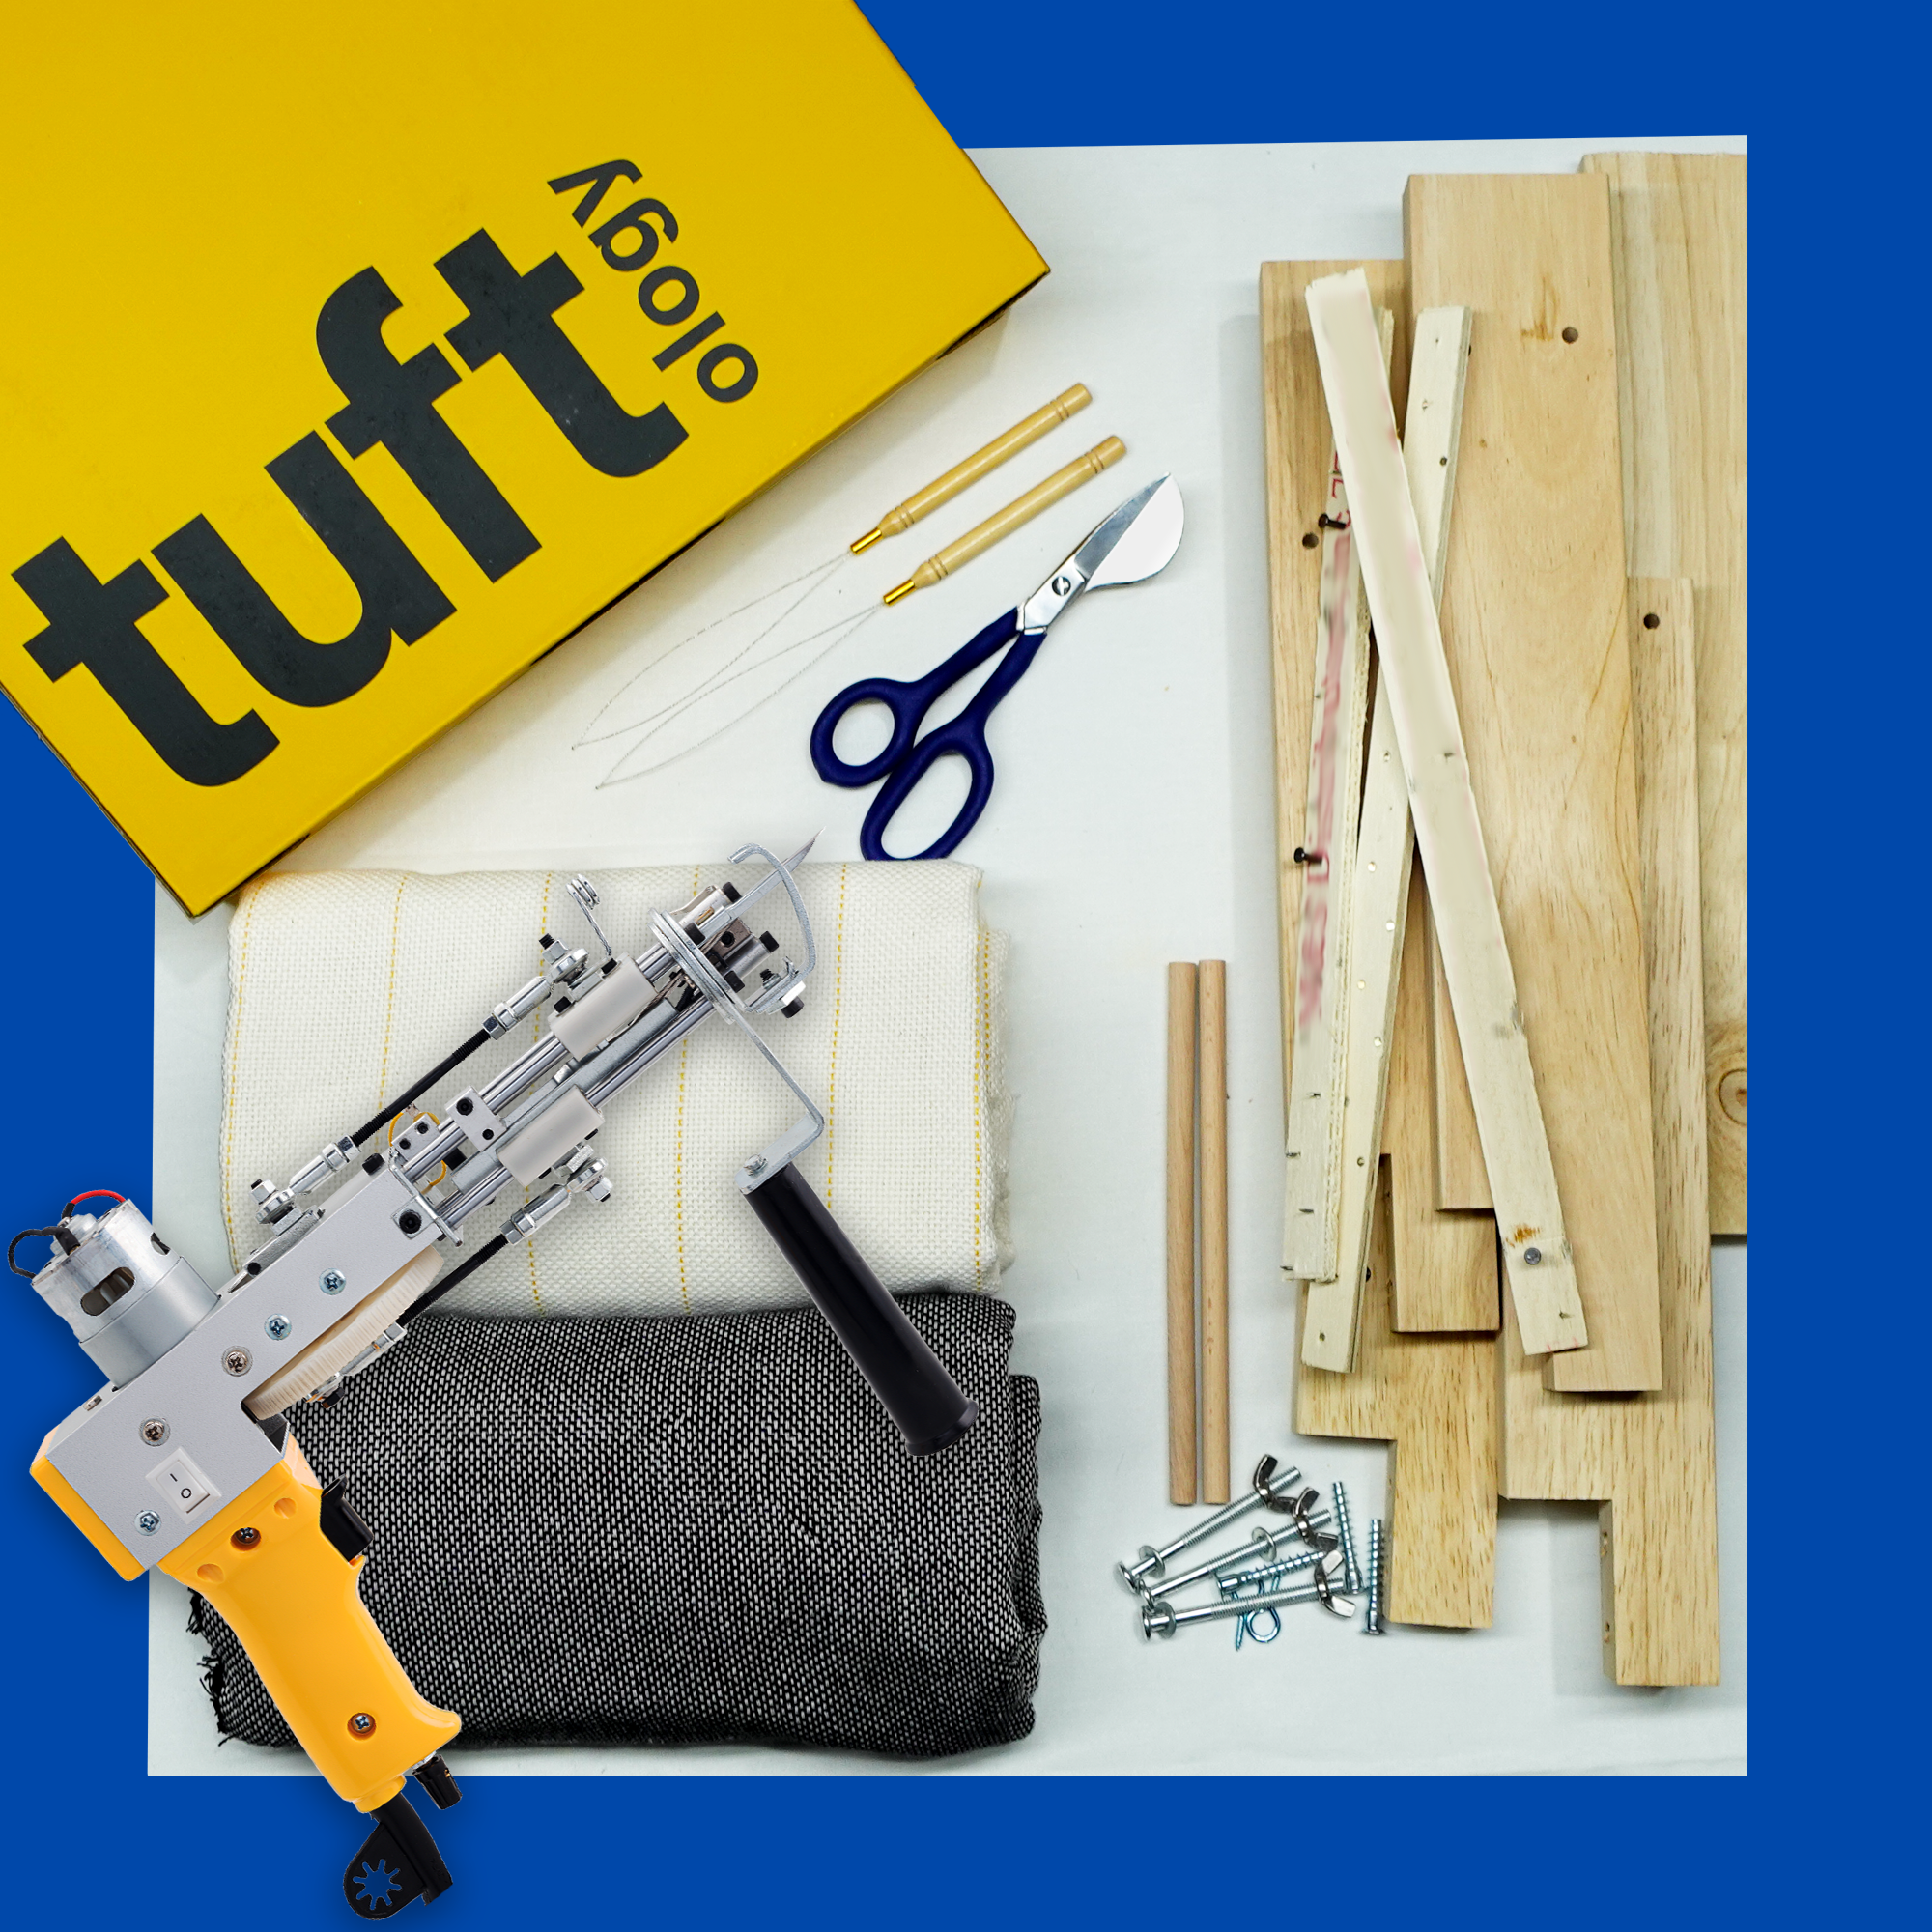 Rug Tufting Supplies & Kits - JOANN